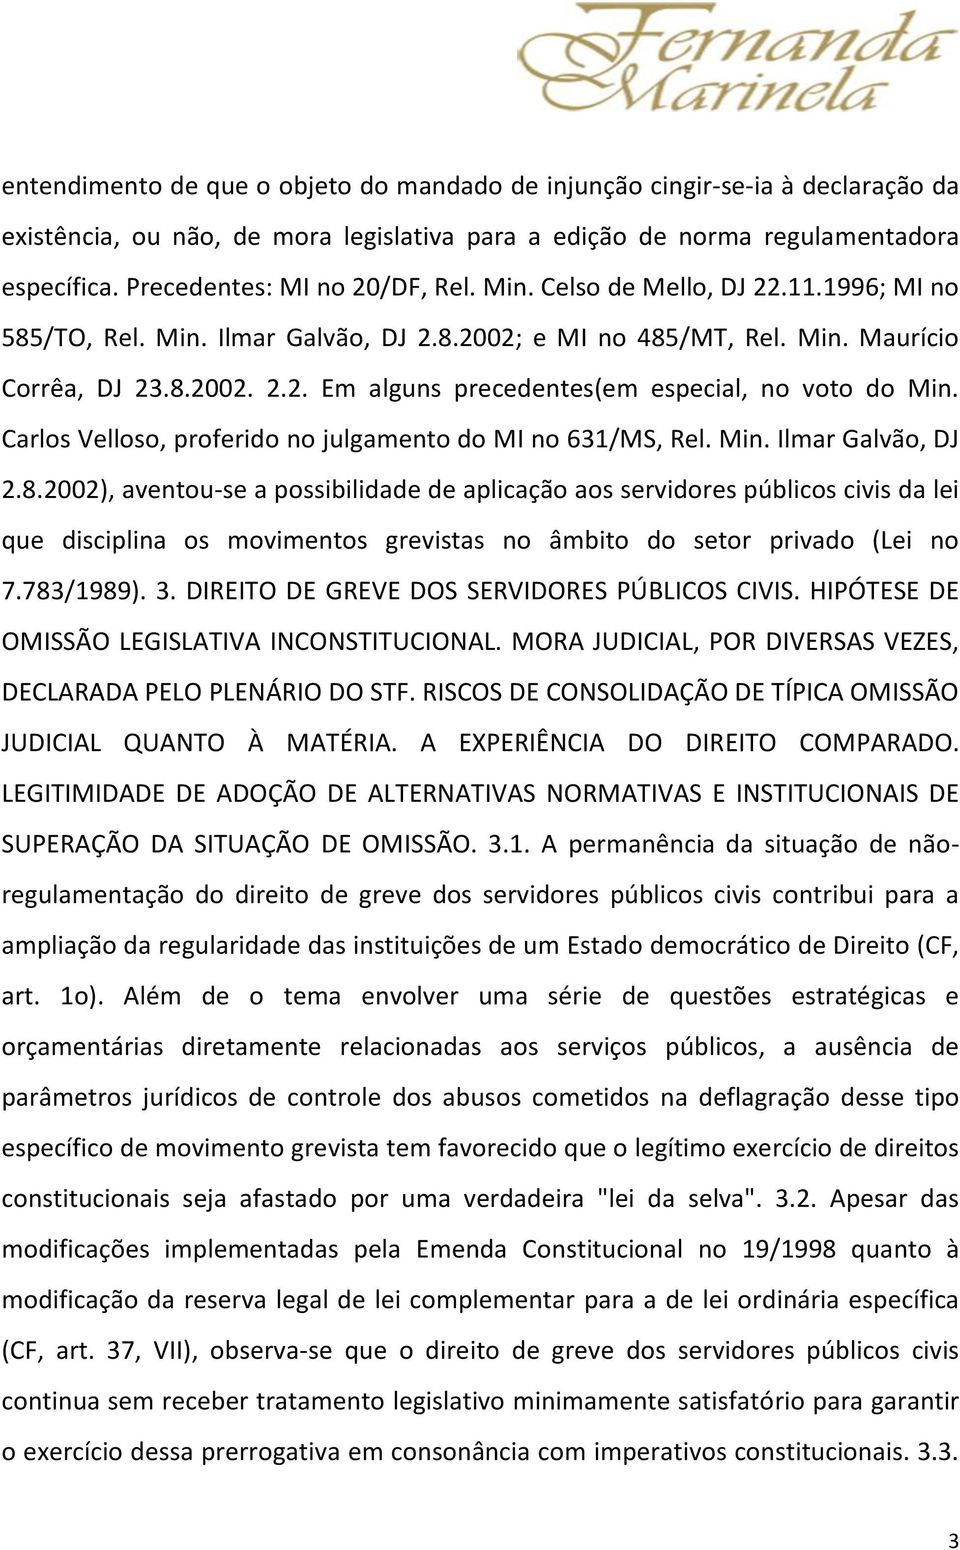 Carlos Velloso, proferido no julgamento do MI no 631/MS, Rel. Min. Ilmar Galvão, DJ 2.8.